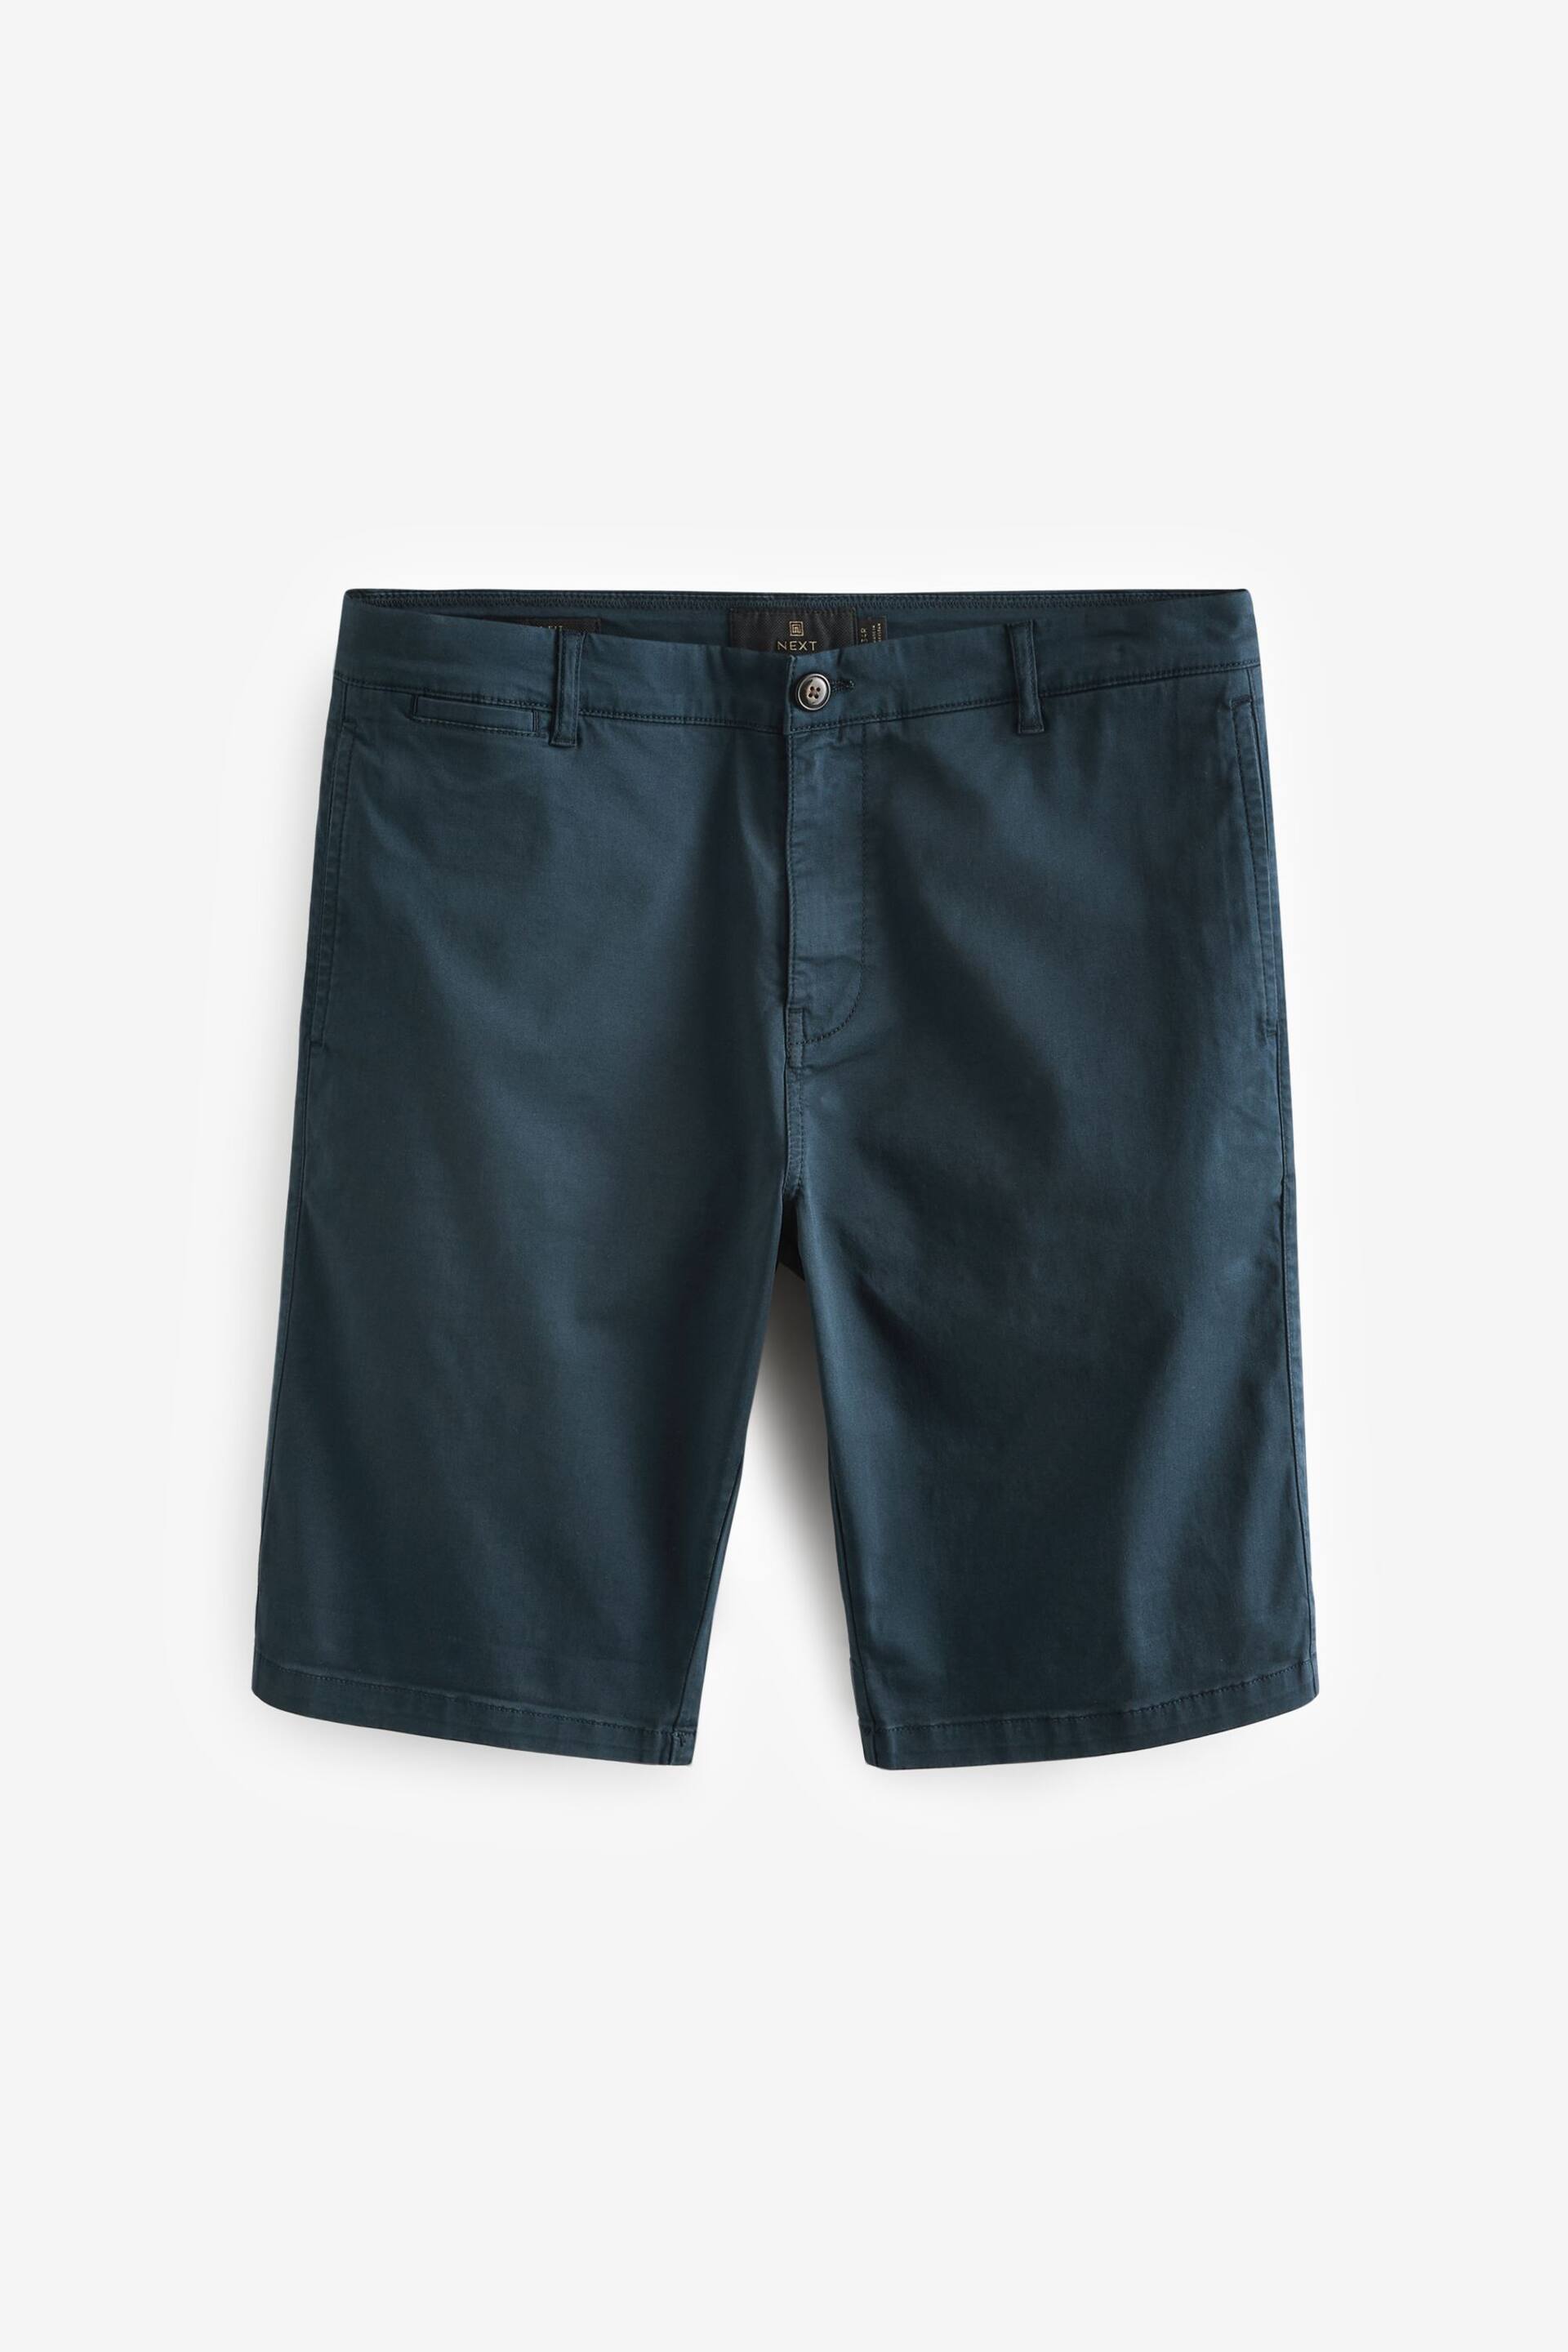 Navy Blue Slim Fit Premium Laundered Stretch Chino Shorts - Image 5 of 8